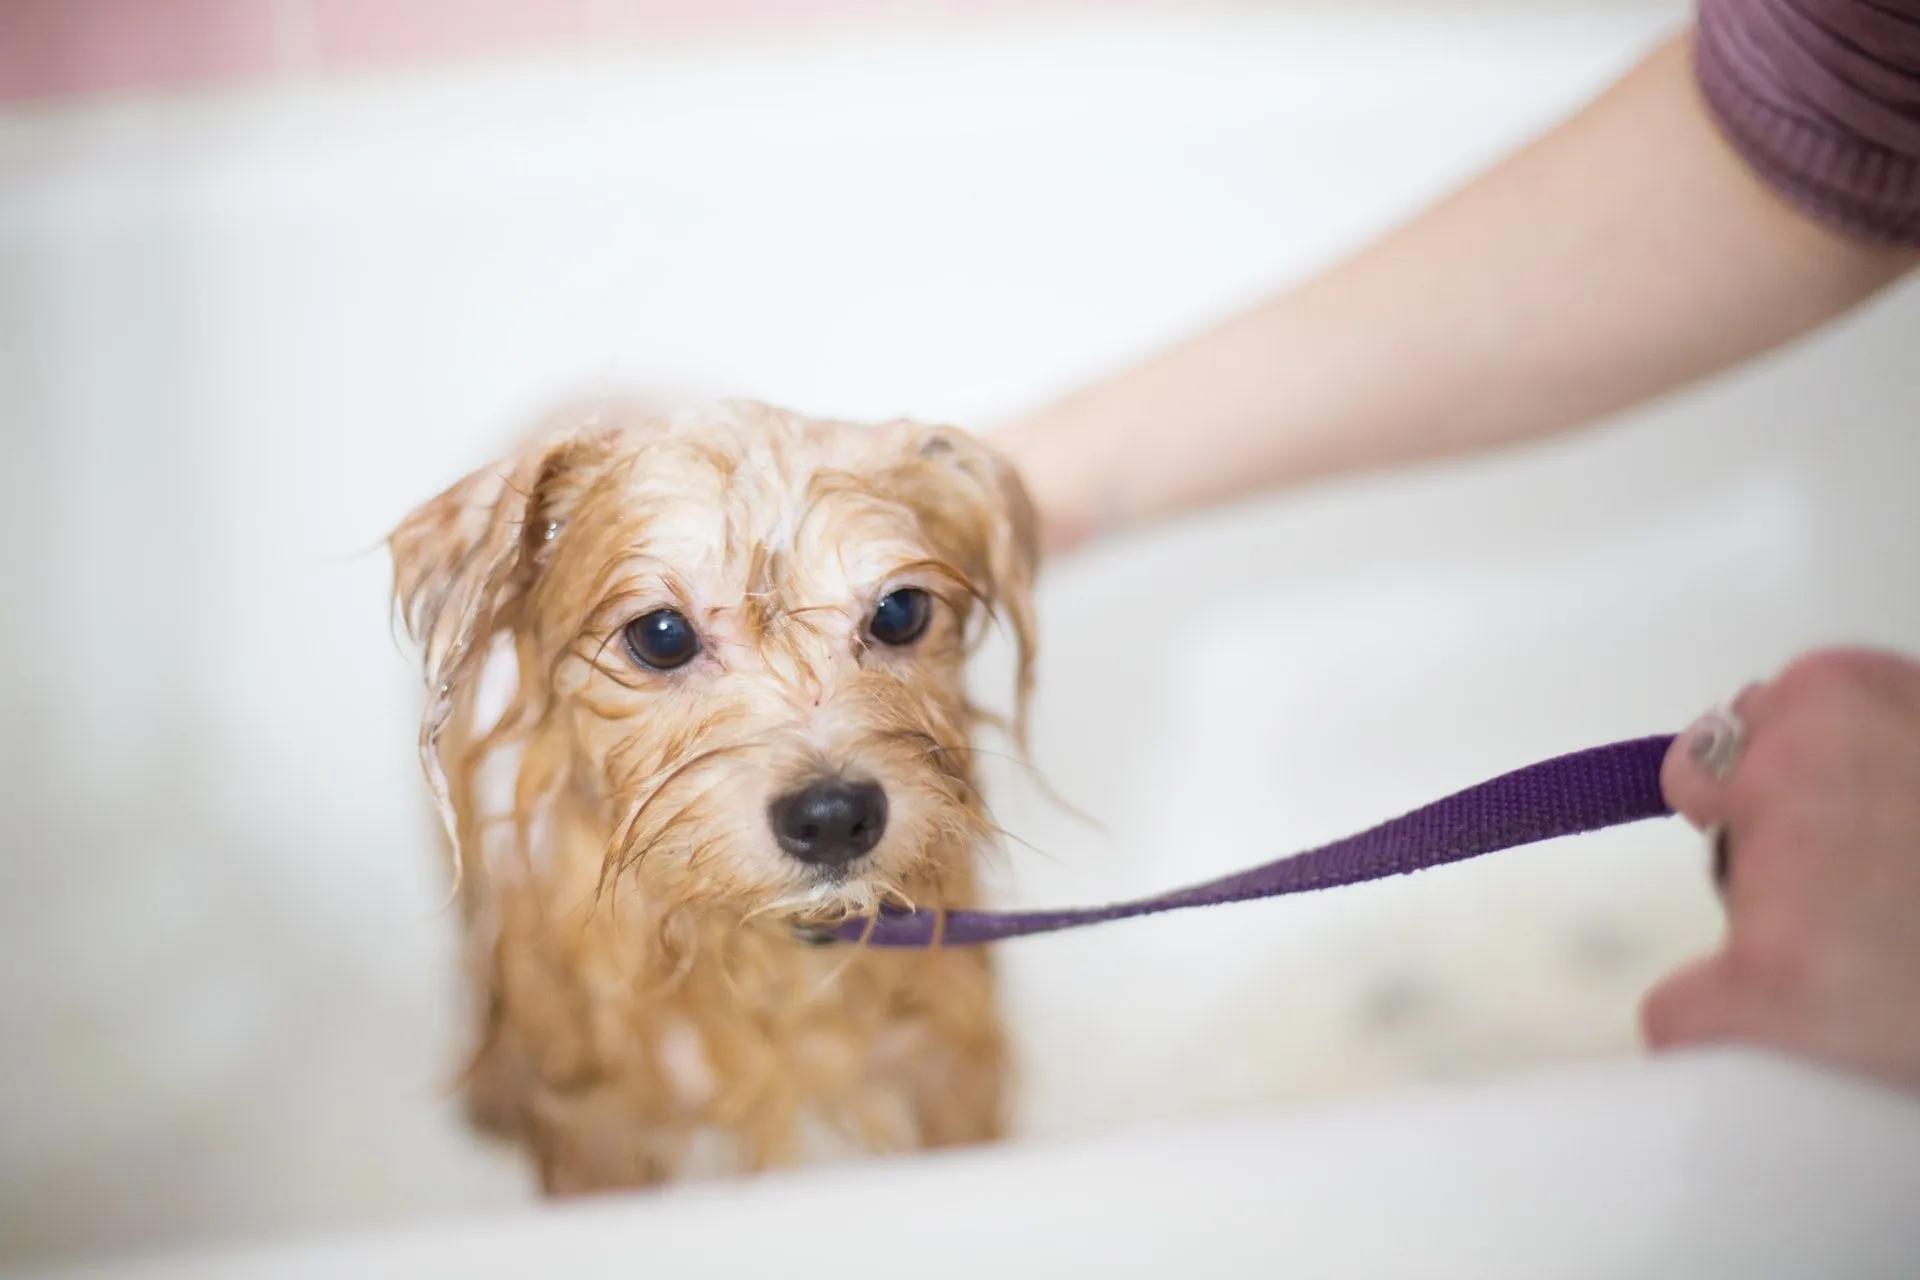 do dogs like getting baths